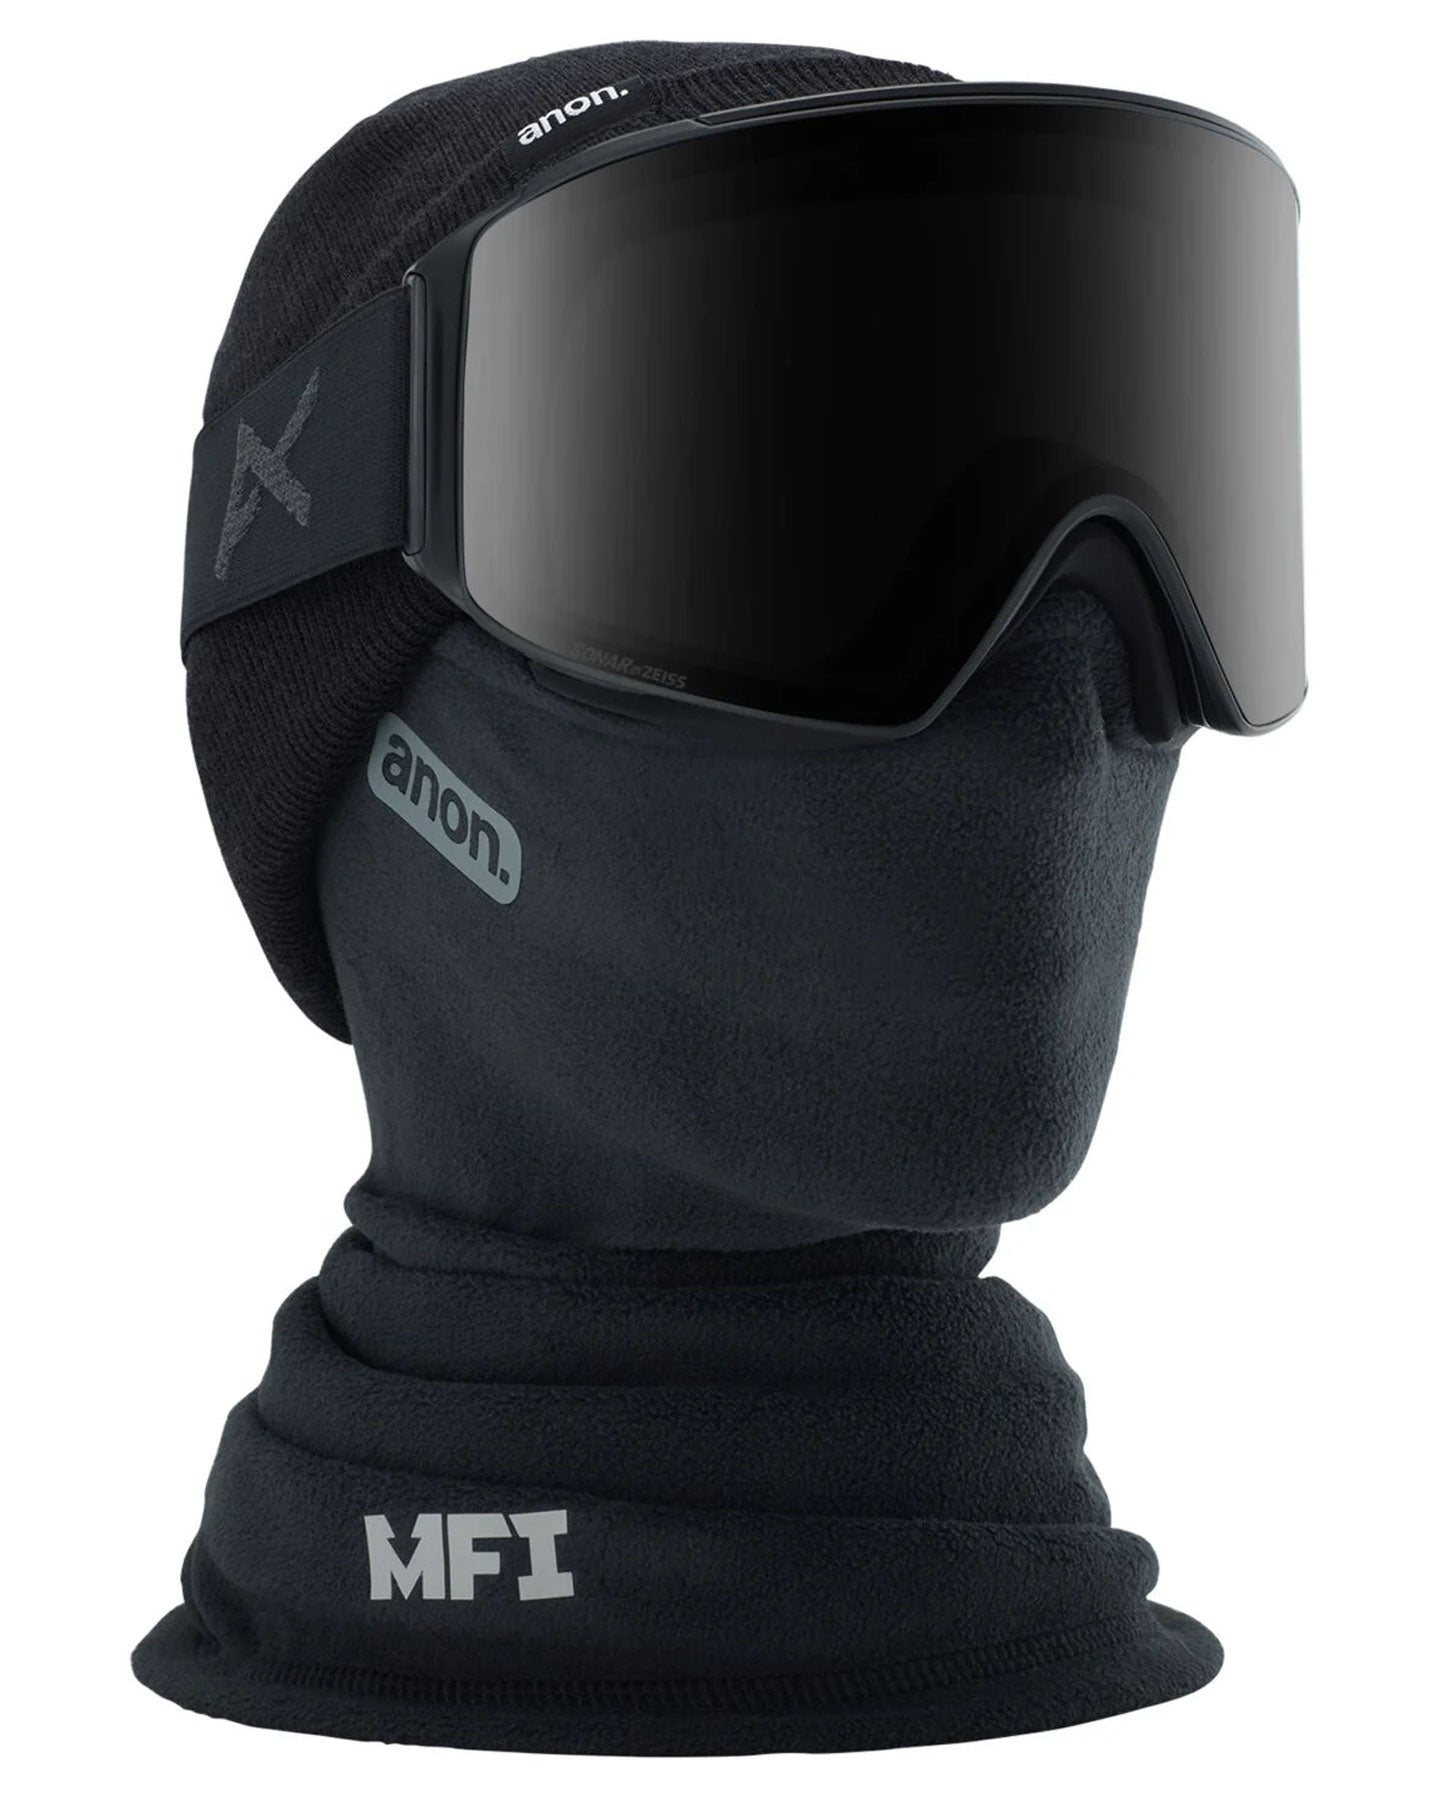 Anon MFI Beanie Neck Warmer - Black Neck Warmers & Face Masks - Trojan Wake Ski Snow